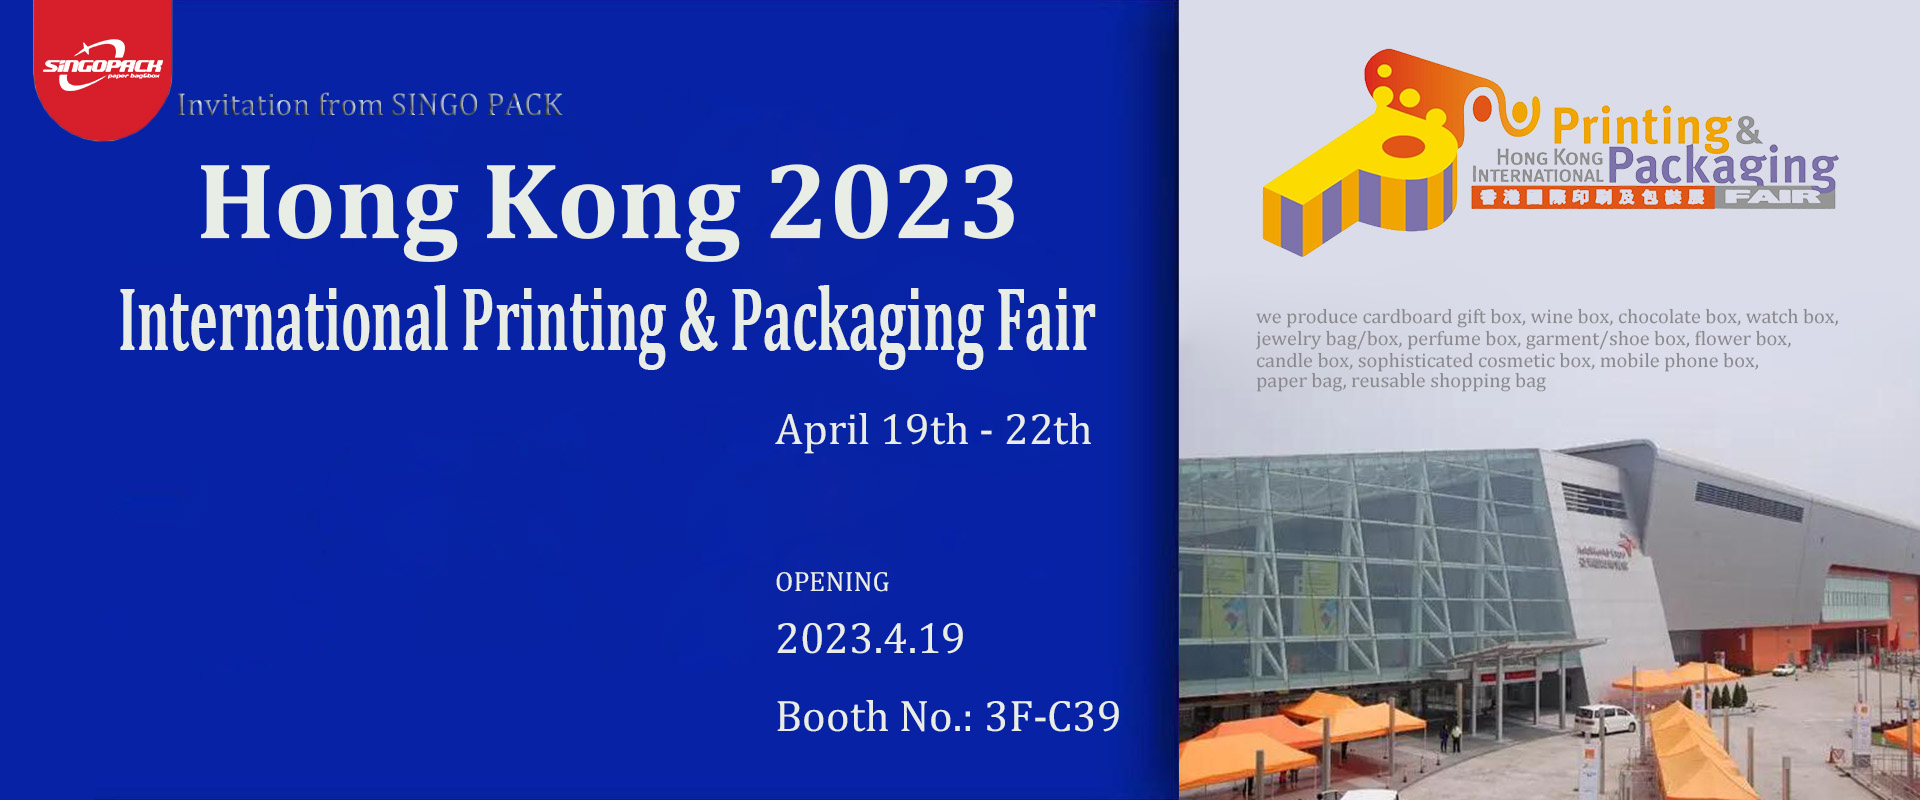 Hong Kong International Printing & Packaging Fair 2023